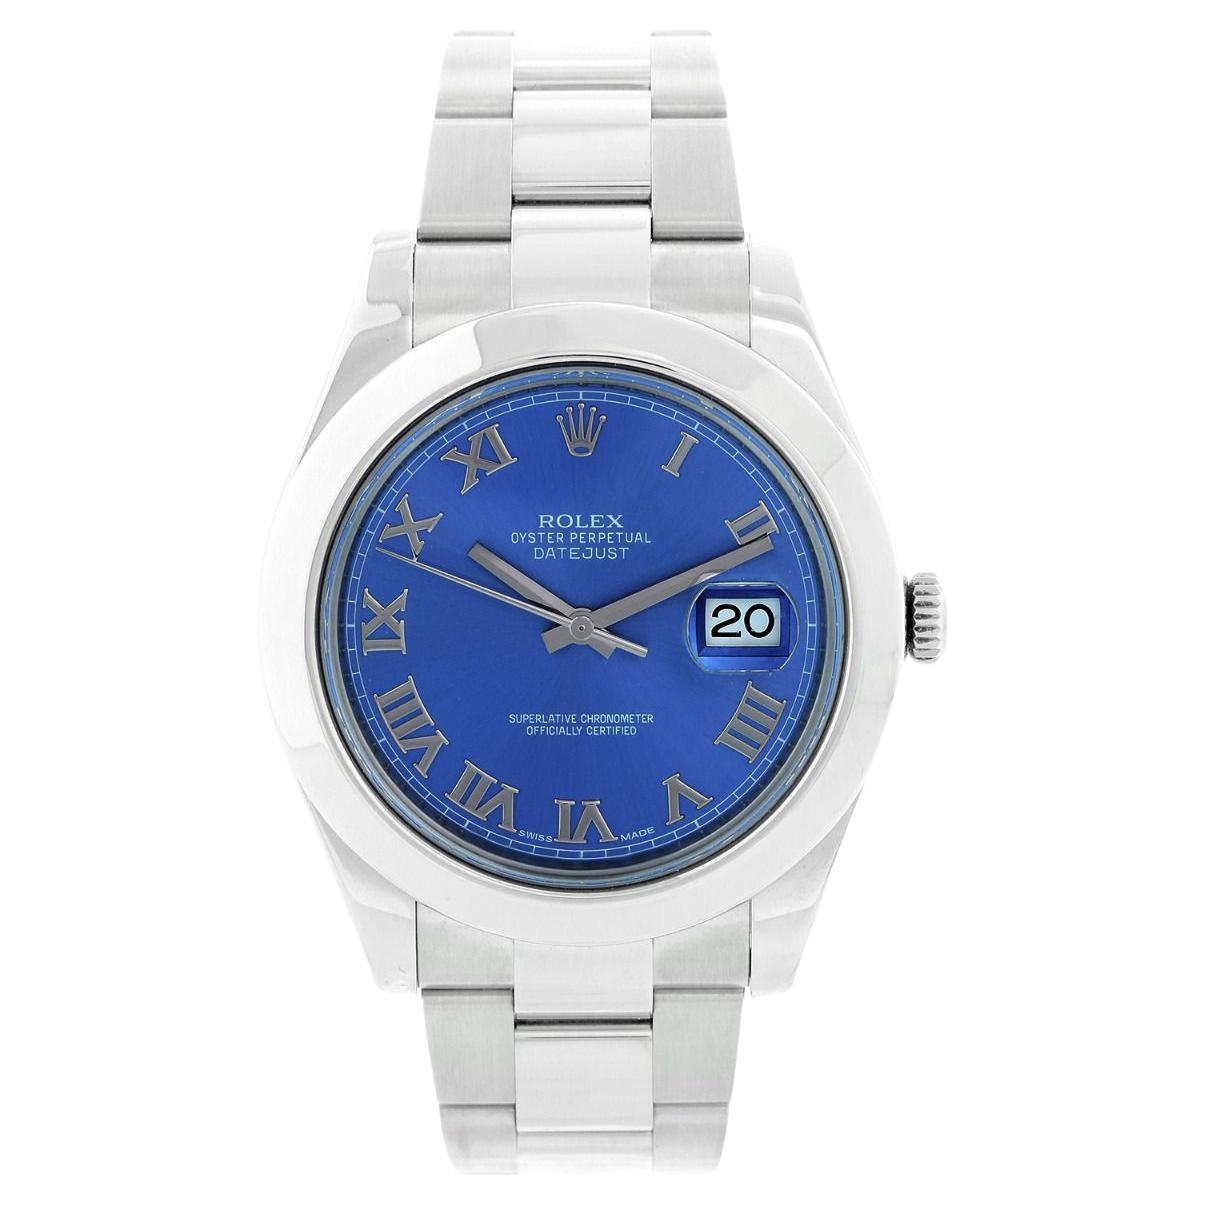 Rolex Datejust II Men's Stainless Steel Watch Blue Dial 116300